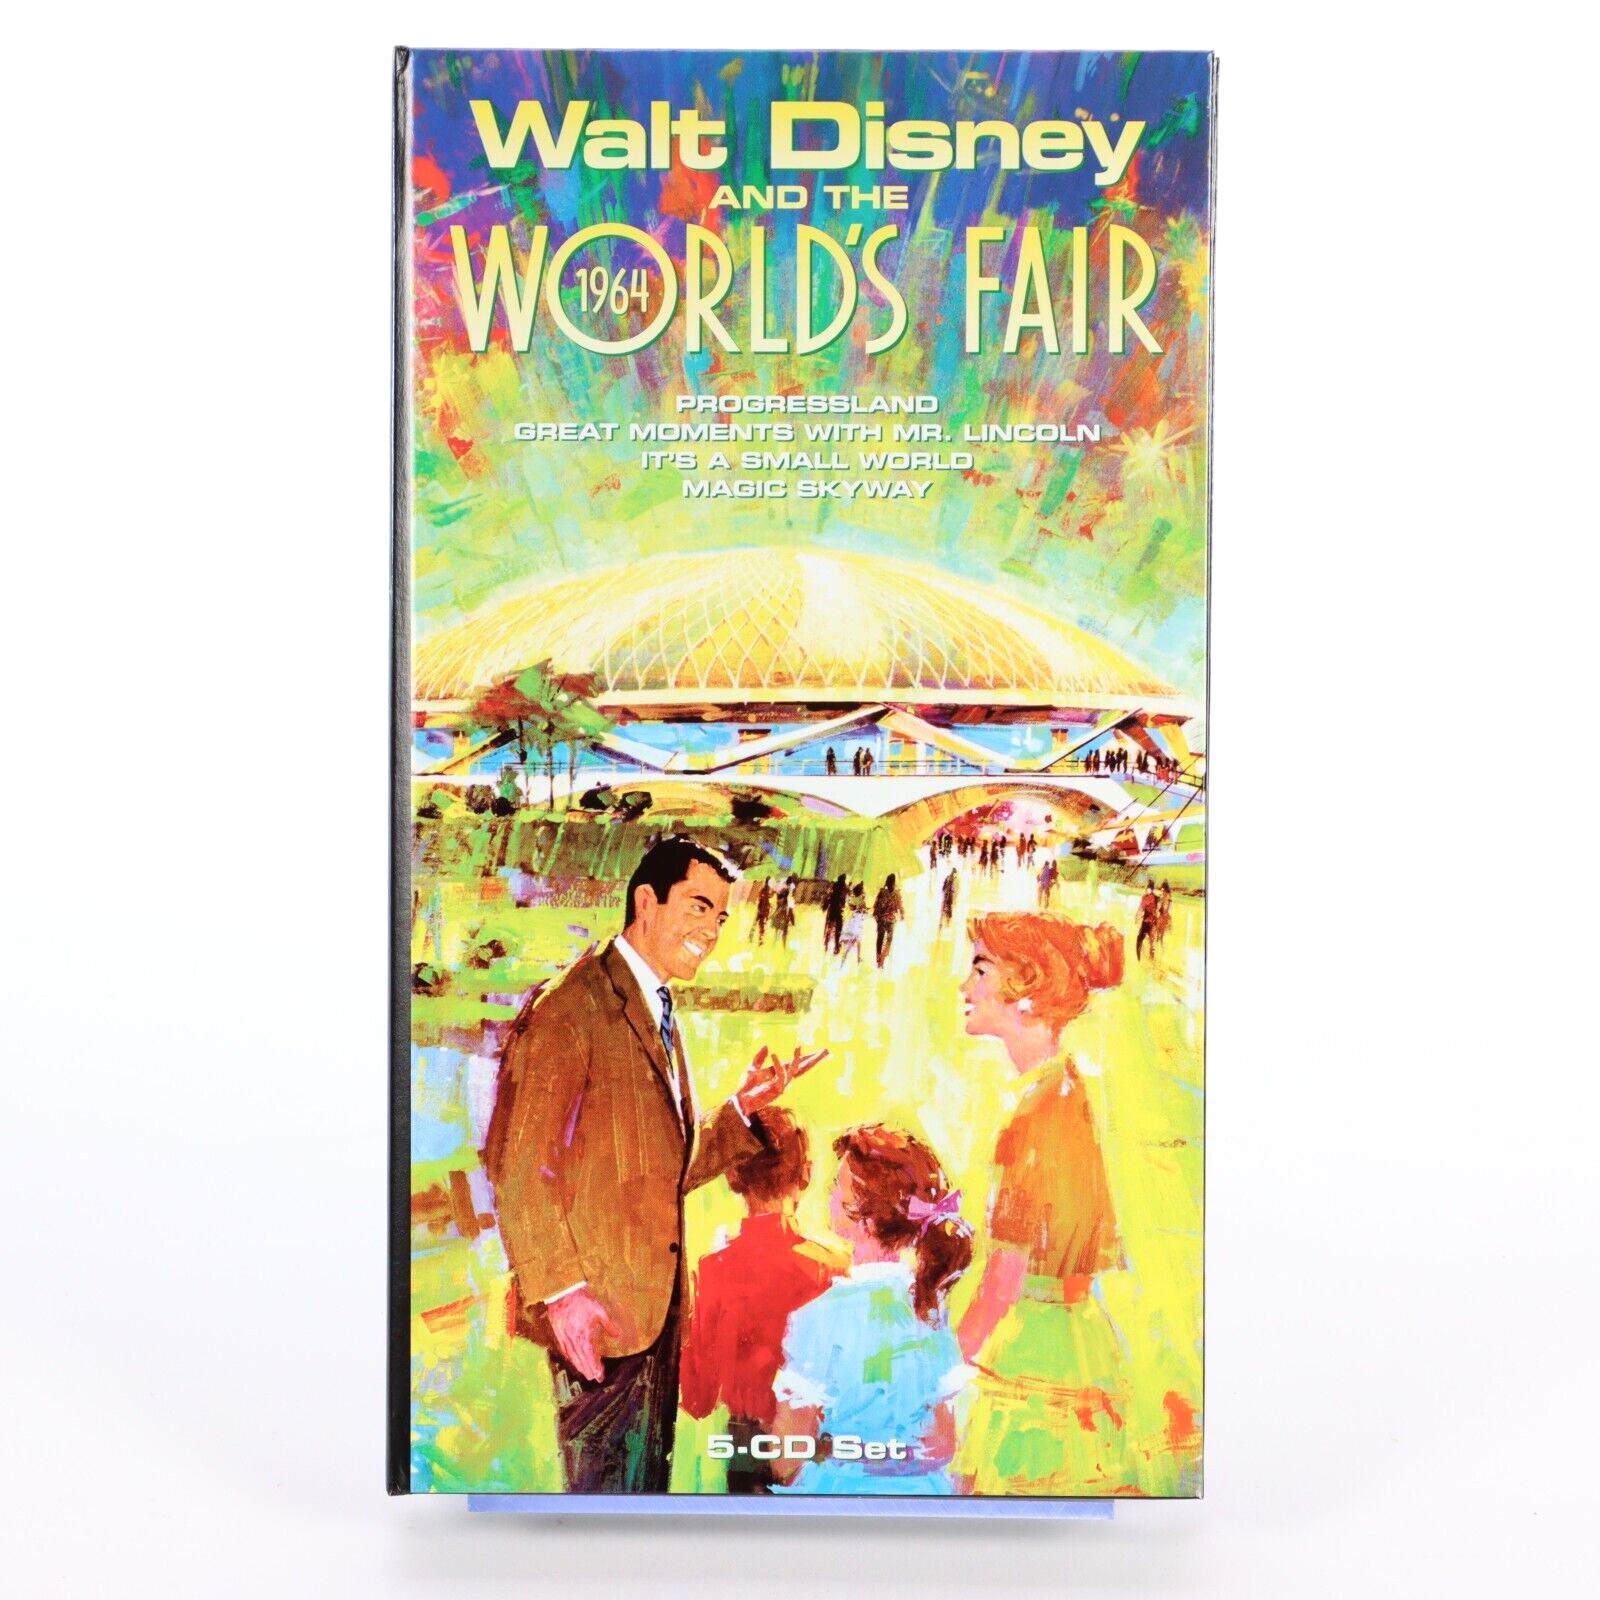 Walt Disney And The 1964 World's Fair 5 CD Box Set Walt Disney Records 2009